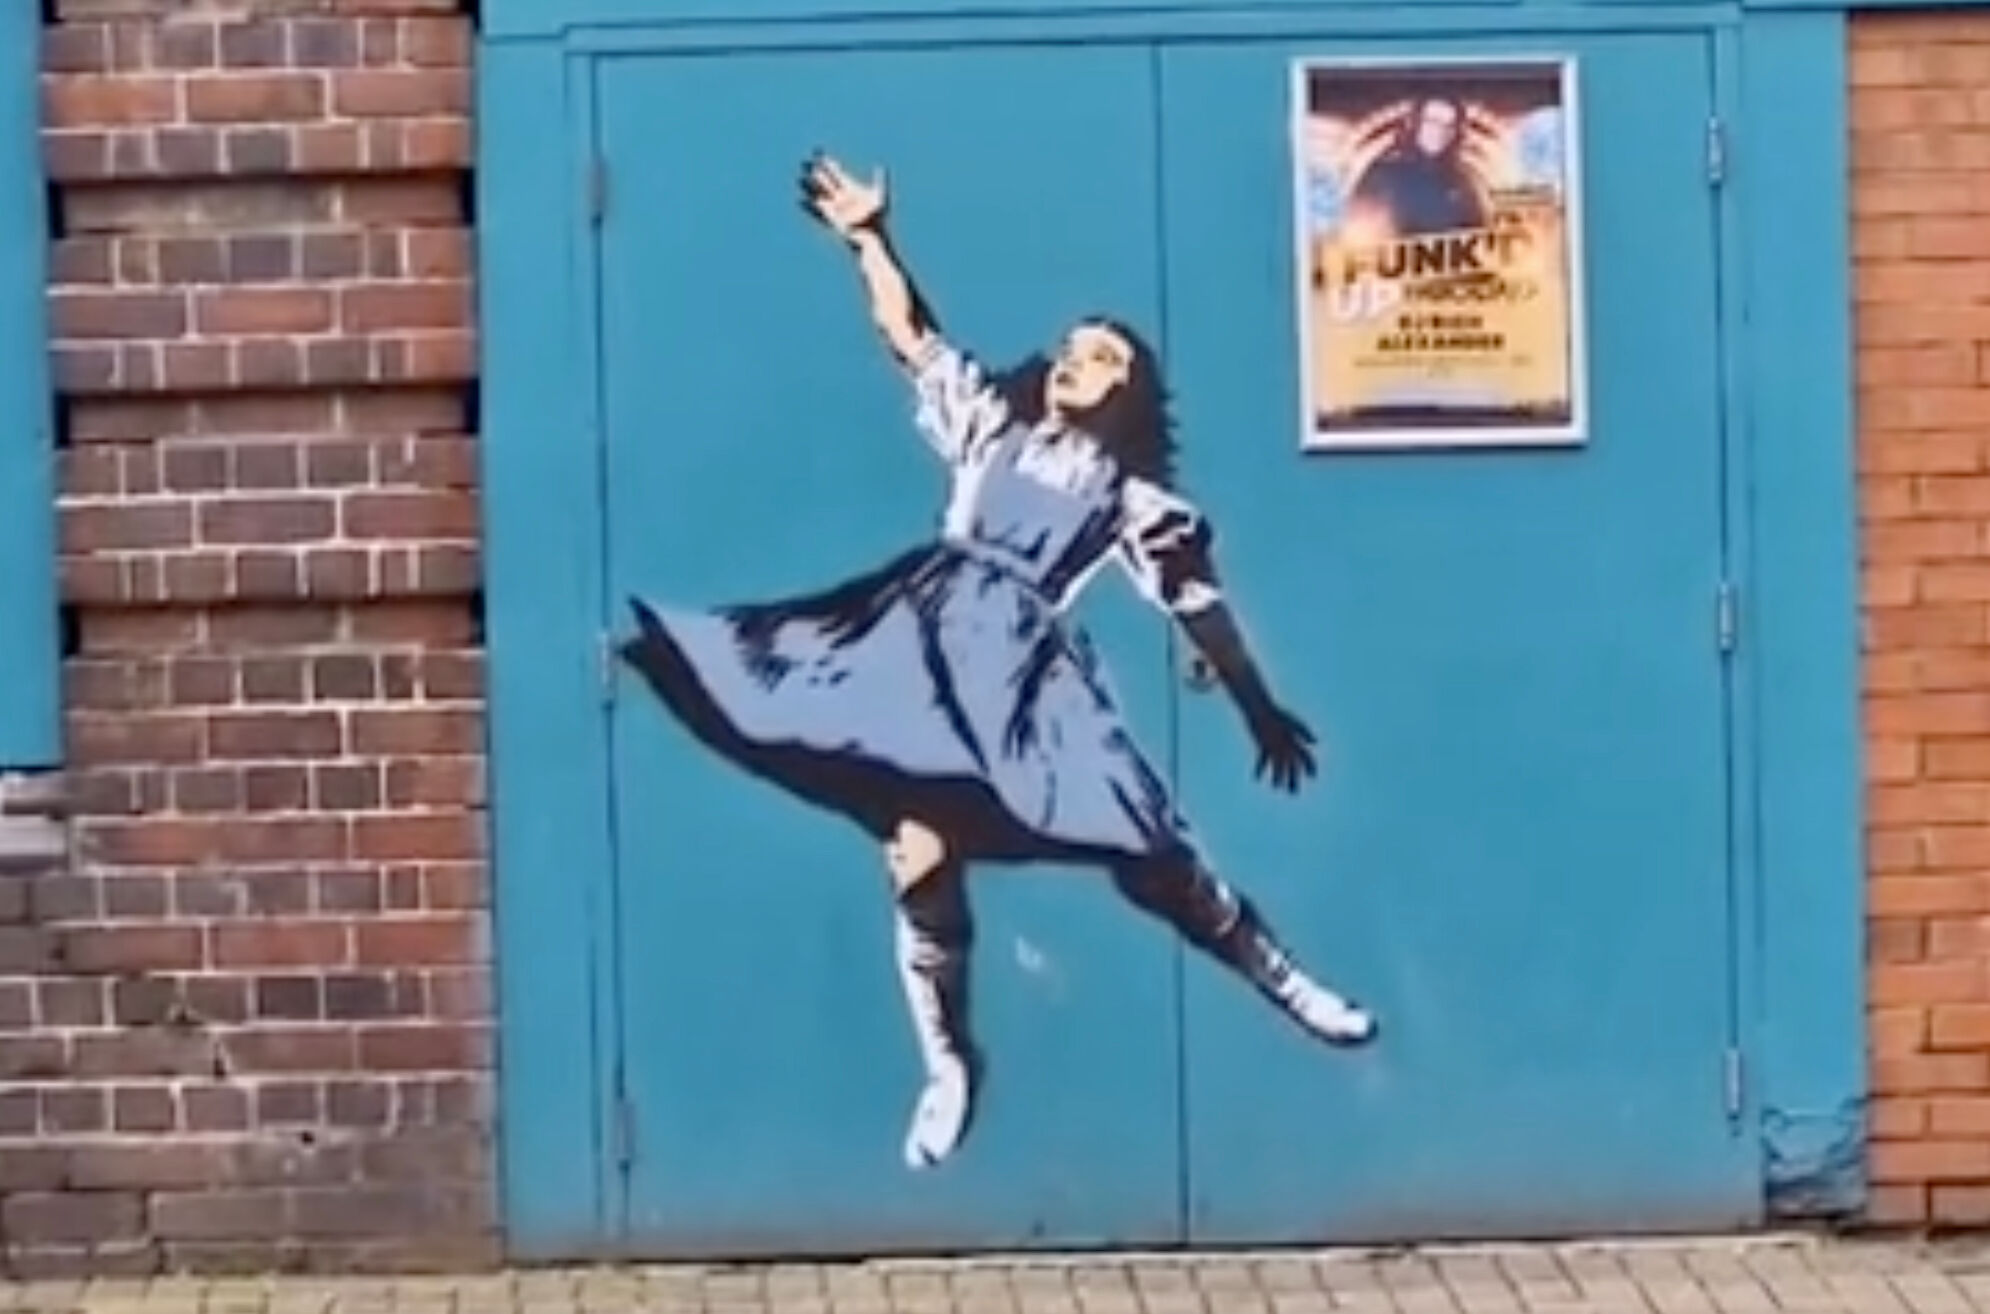 The mural of Dorothy outside the Sidewalk bar in Birmingham, U.K.